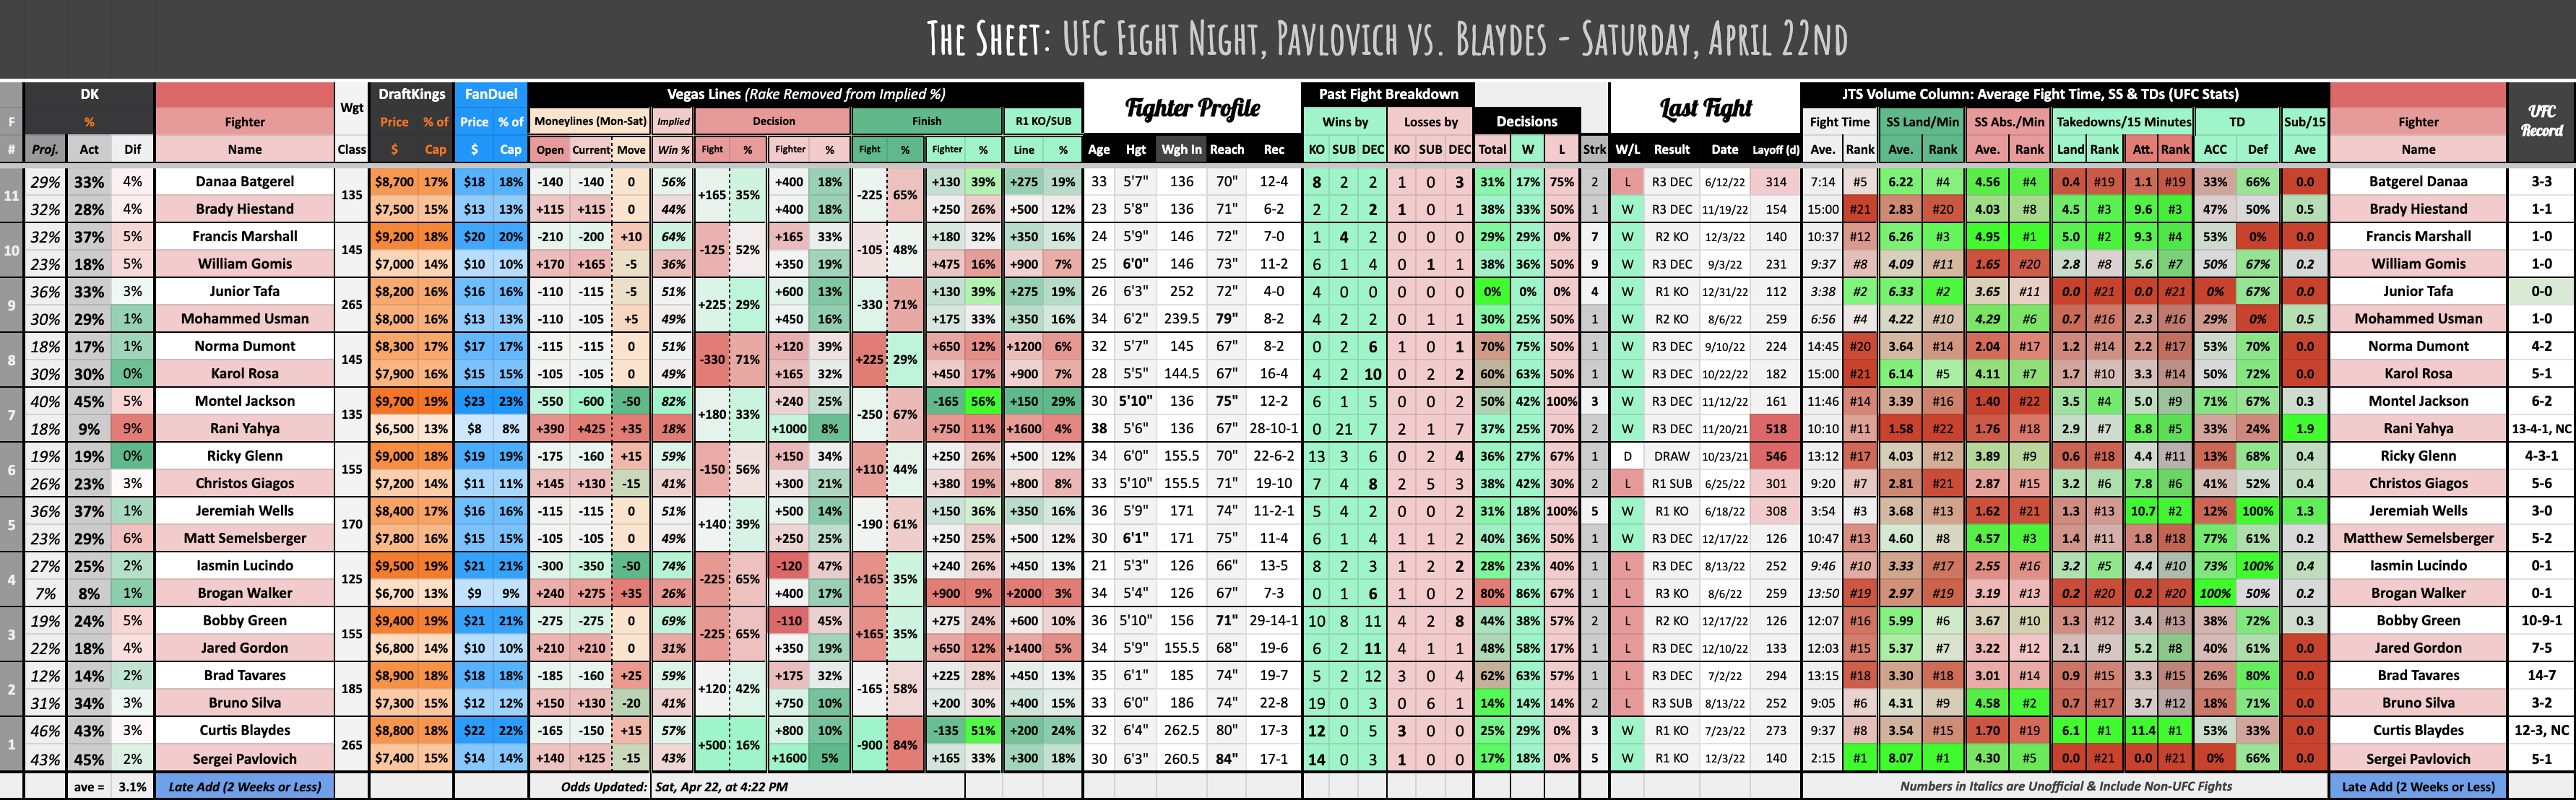 UFC Fight Night, Pavlovich vs. Blaydes - Saturday, April 22nd